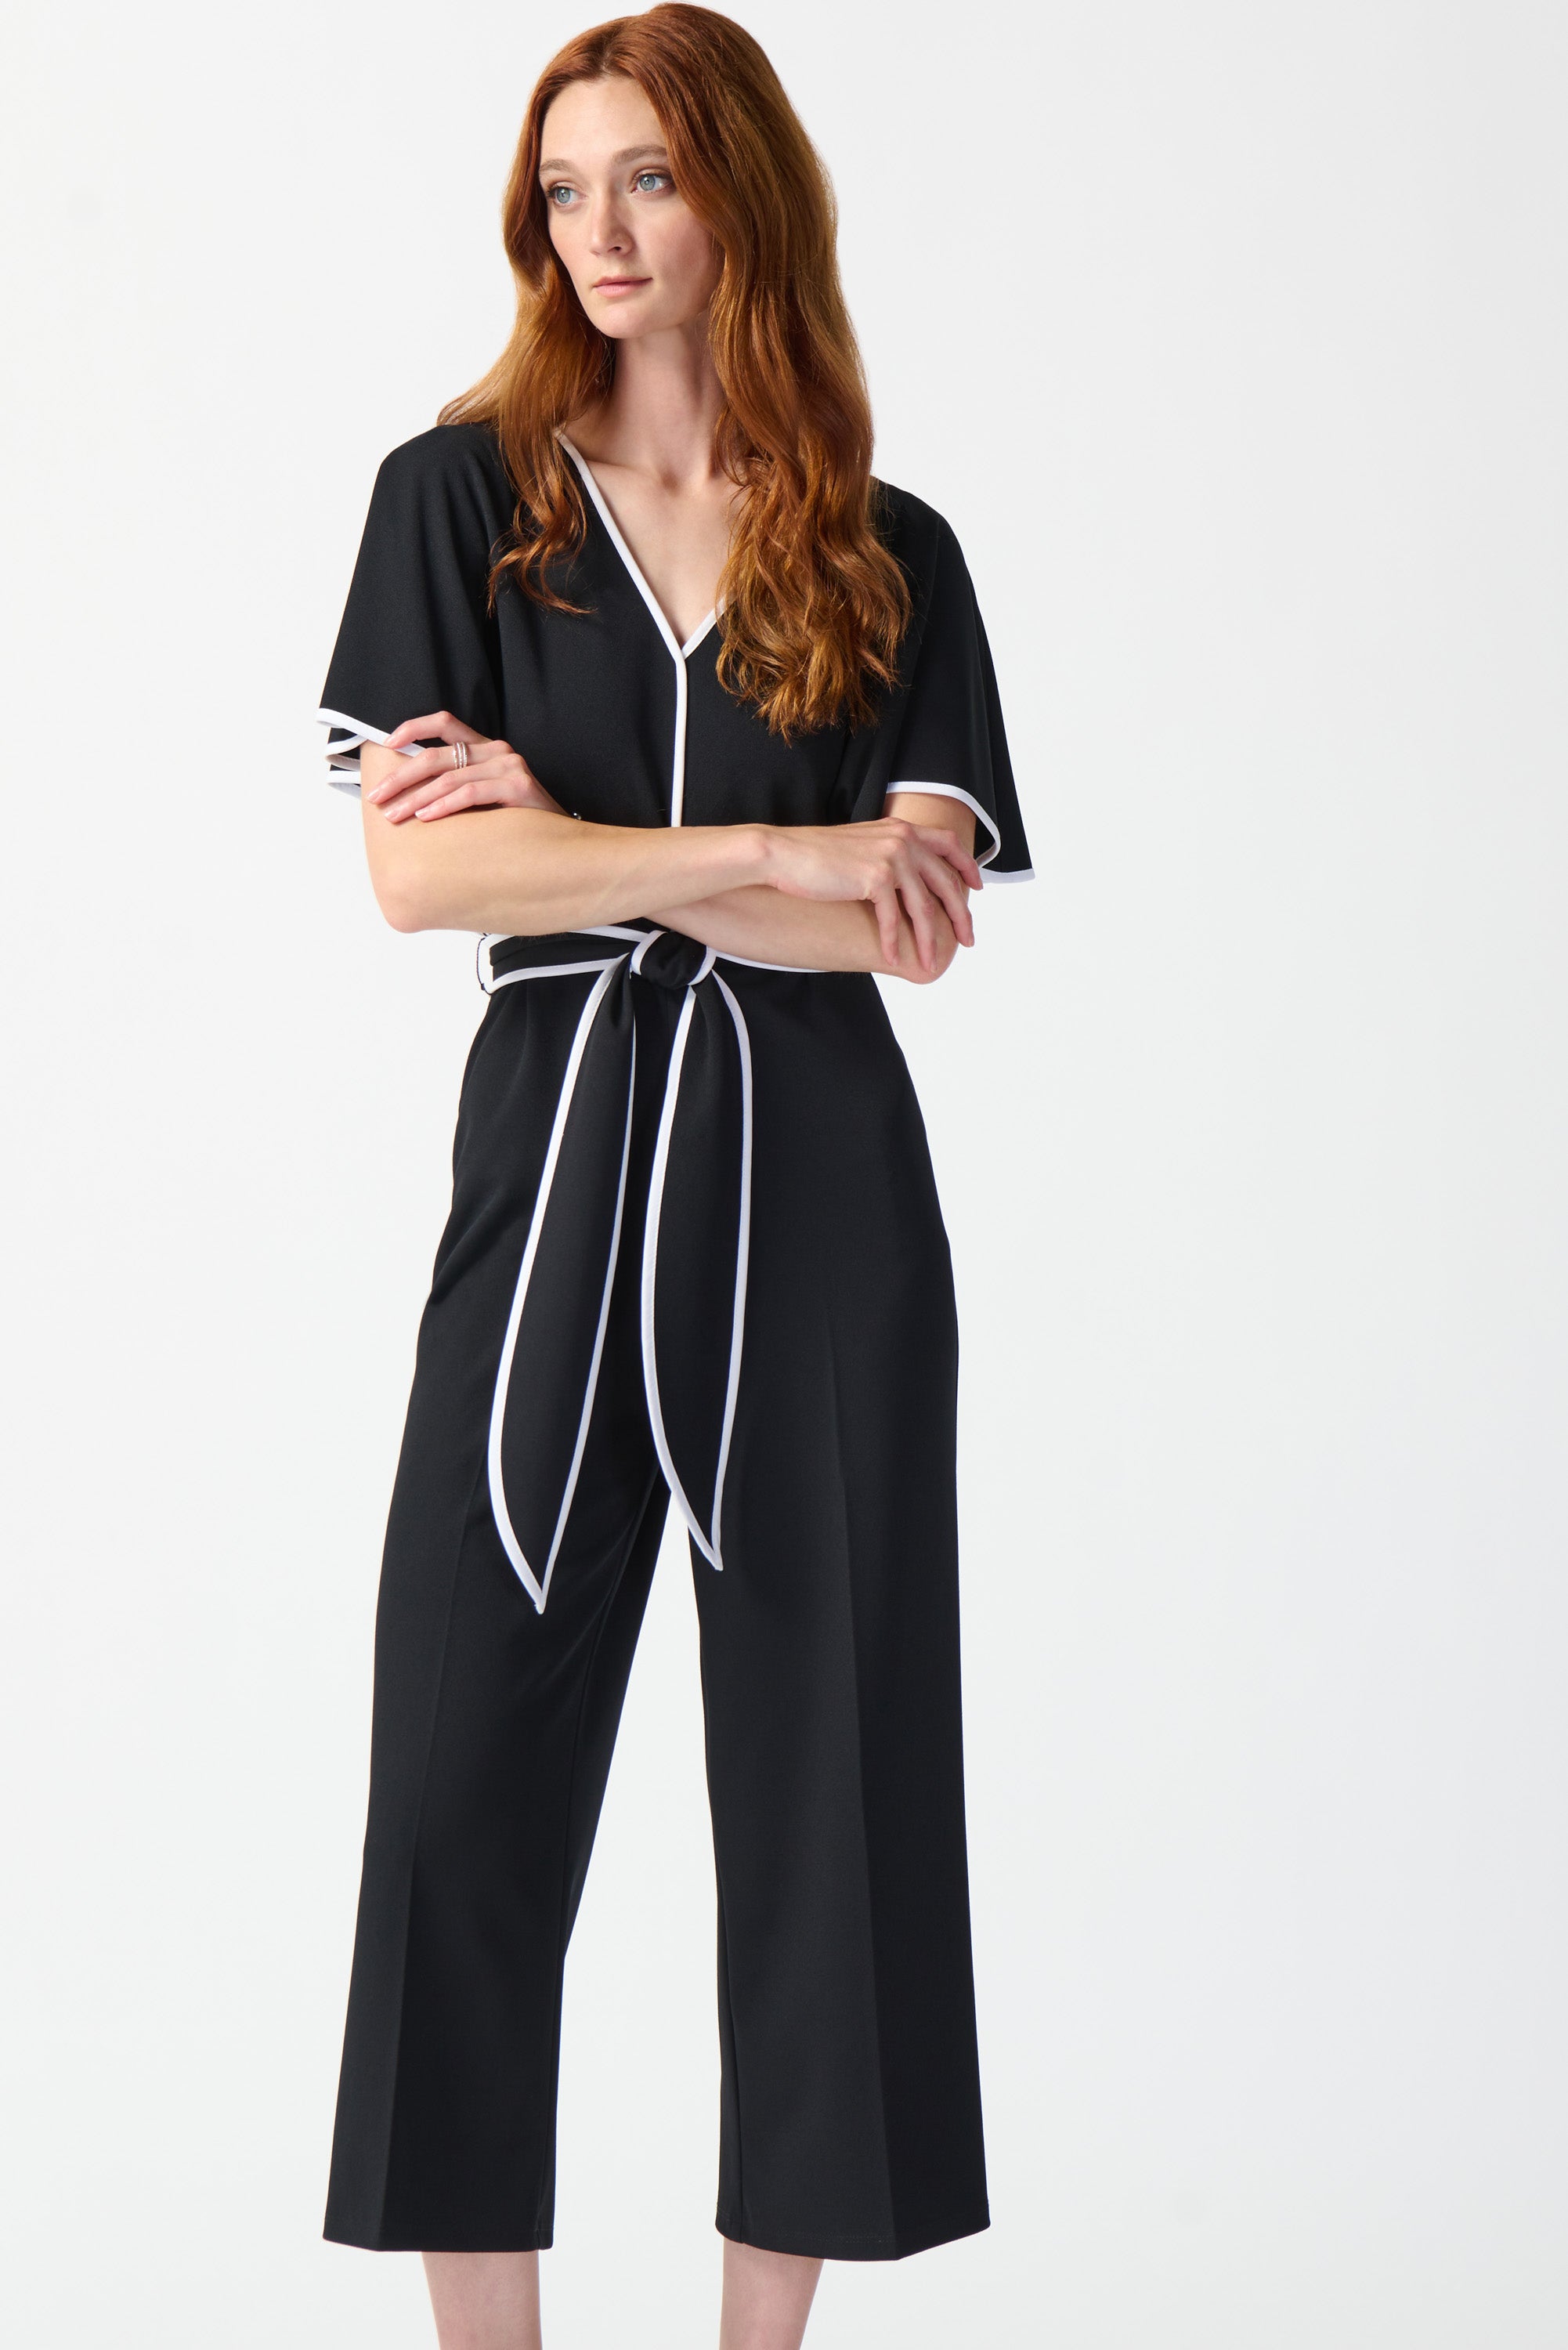 Kaia Plus Size Jumpsuit by Designer Joseph Ribkoff 242024